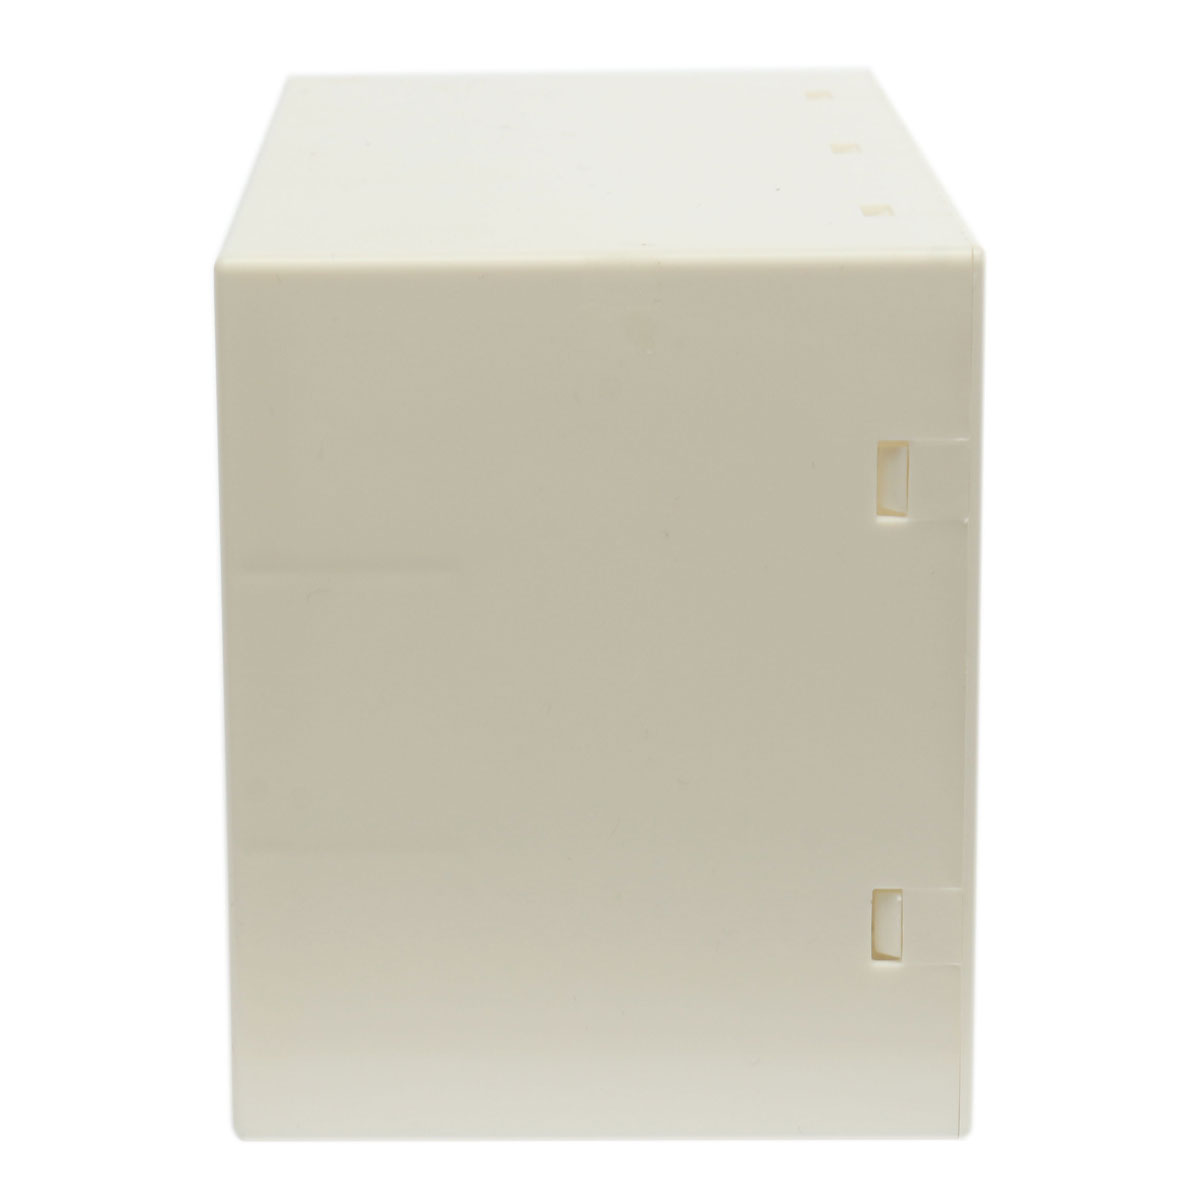 Plastic 9 Lattice Portable Mini Debris Cabinets Amall Drawer Jewelry Storage Box